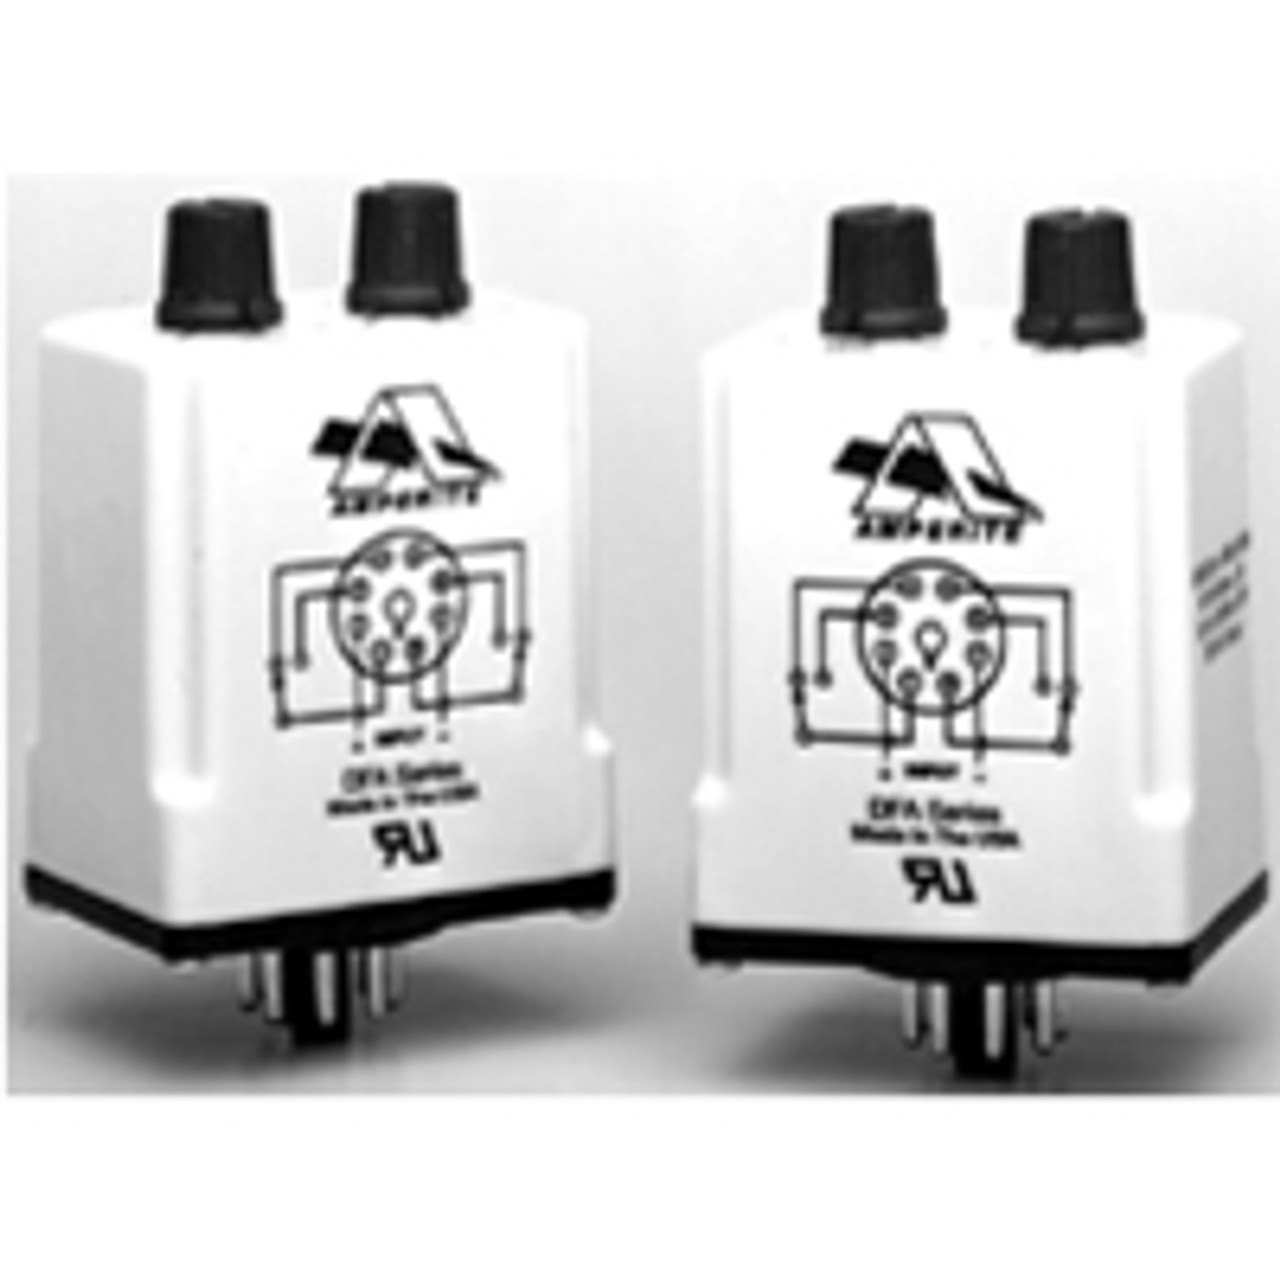 Amperite 120AA/CDFA Dual Rate Flashers